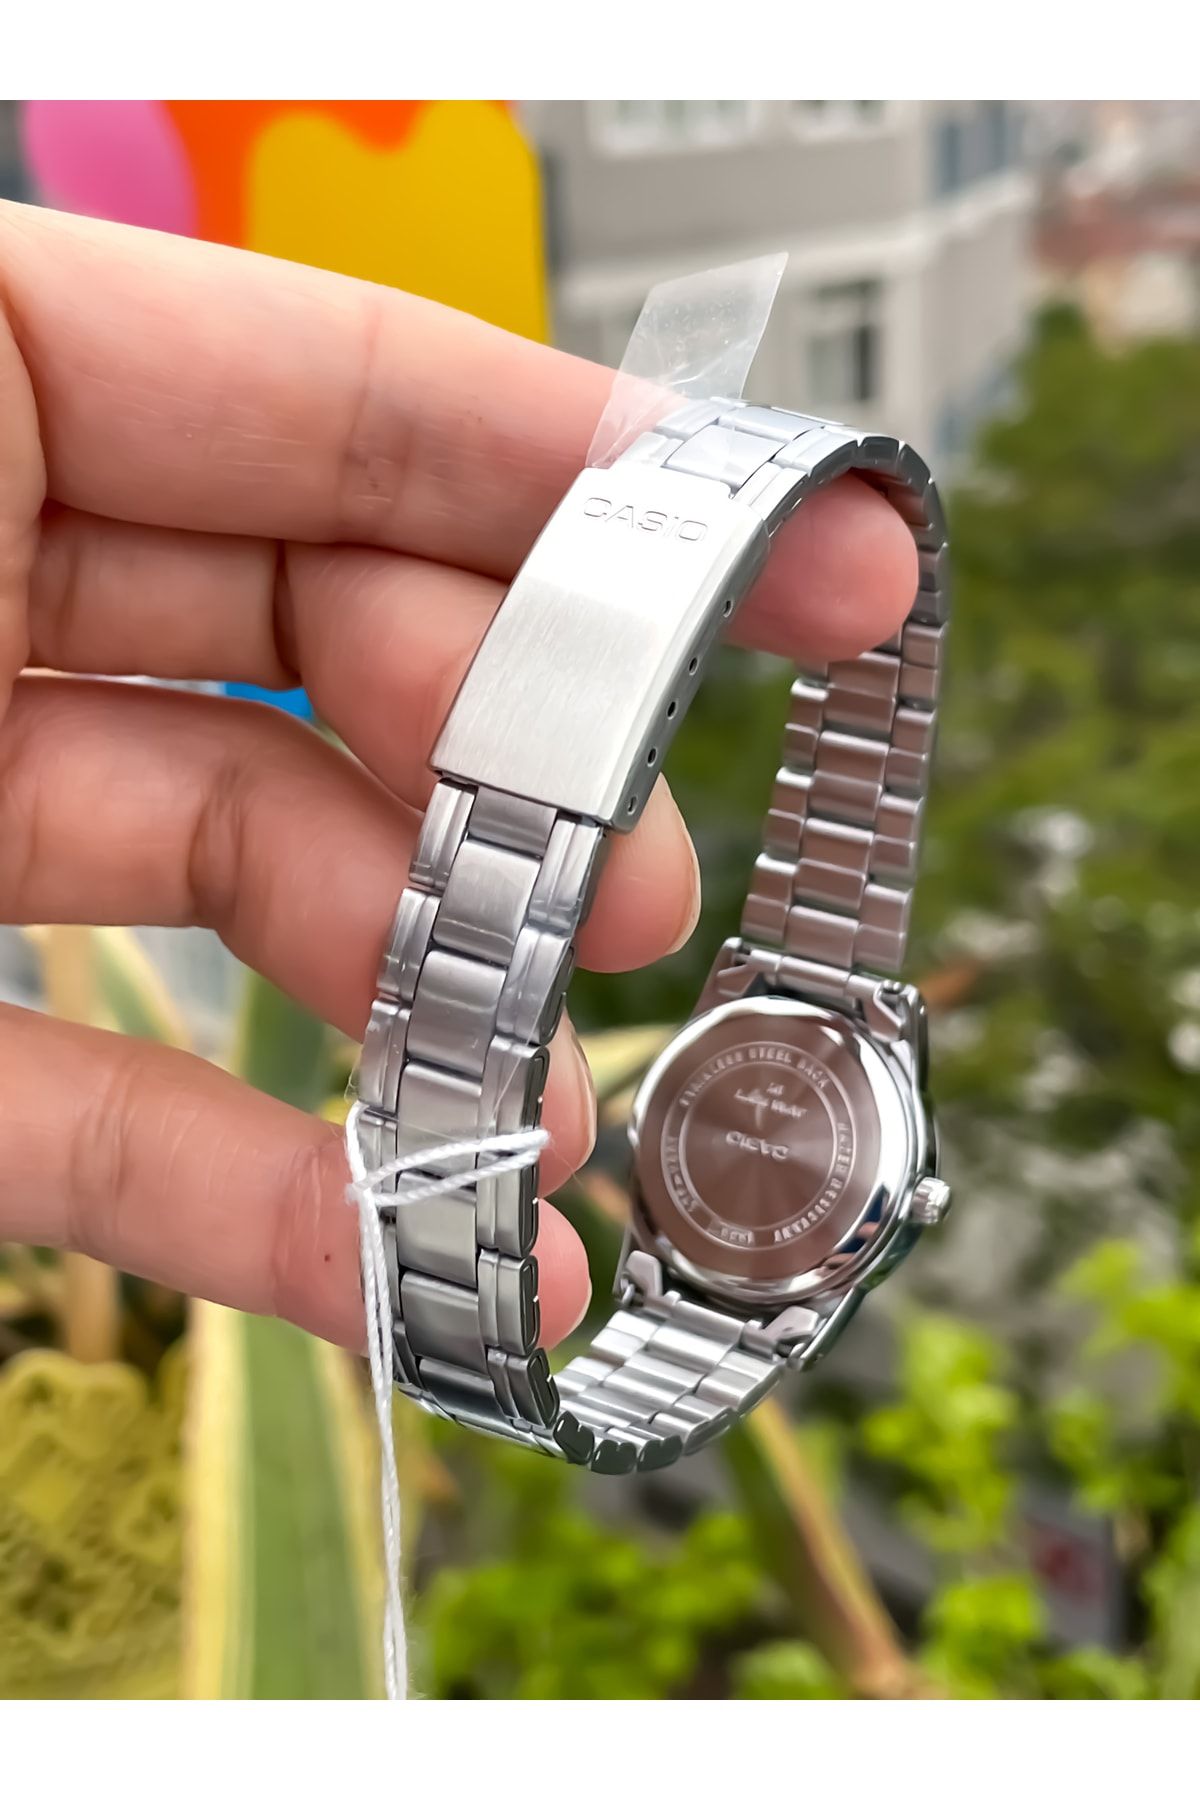 Casio Watch - Gray - Plain